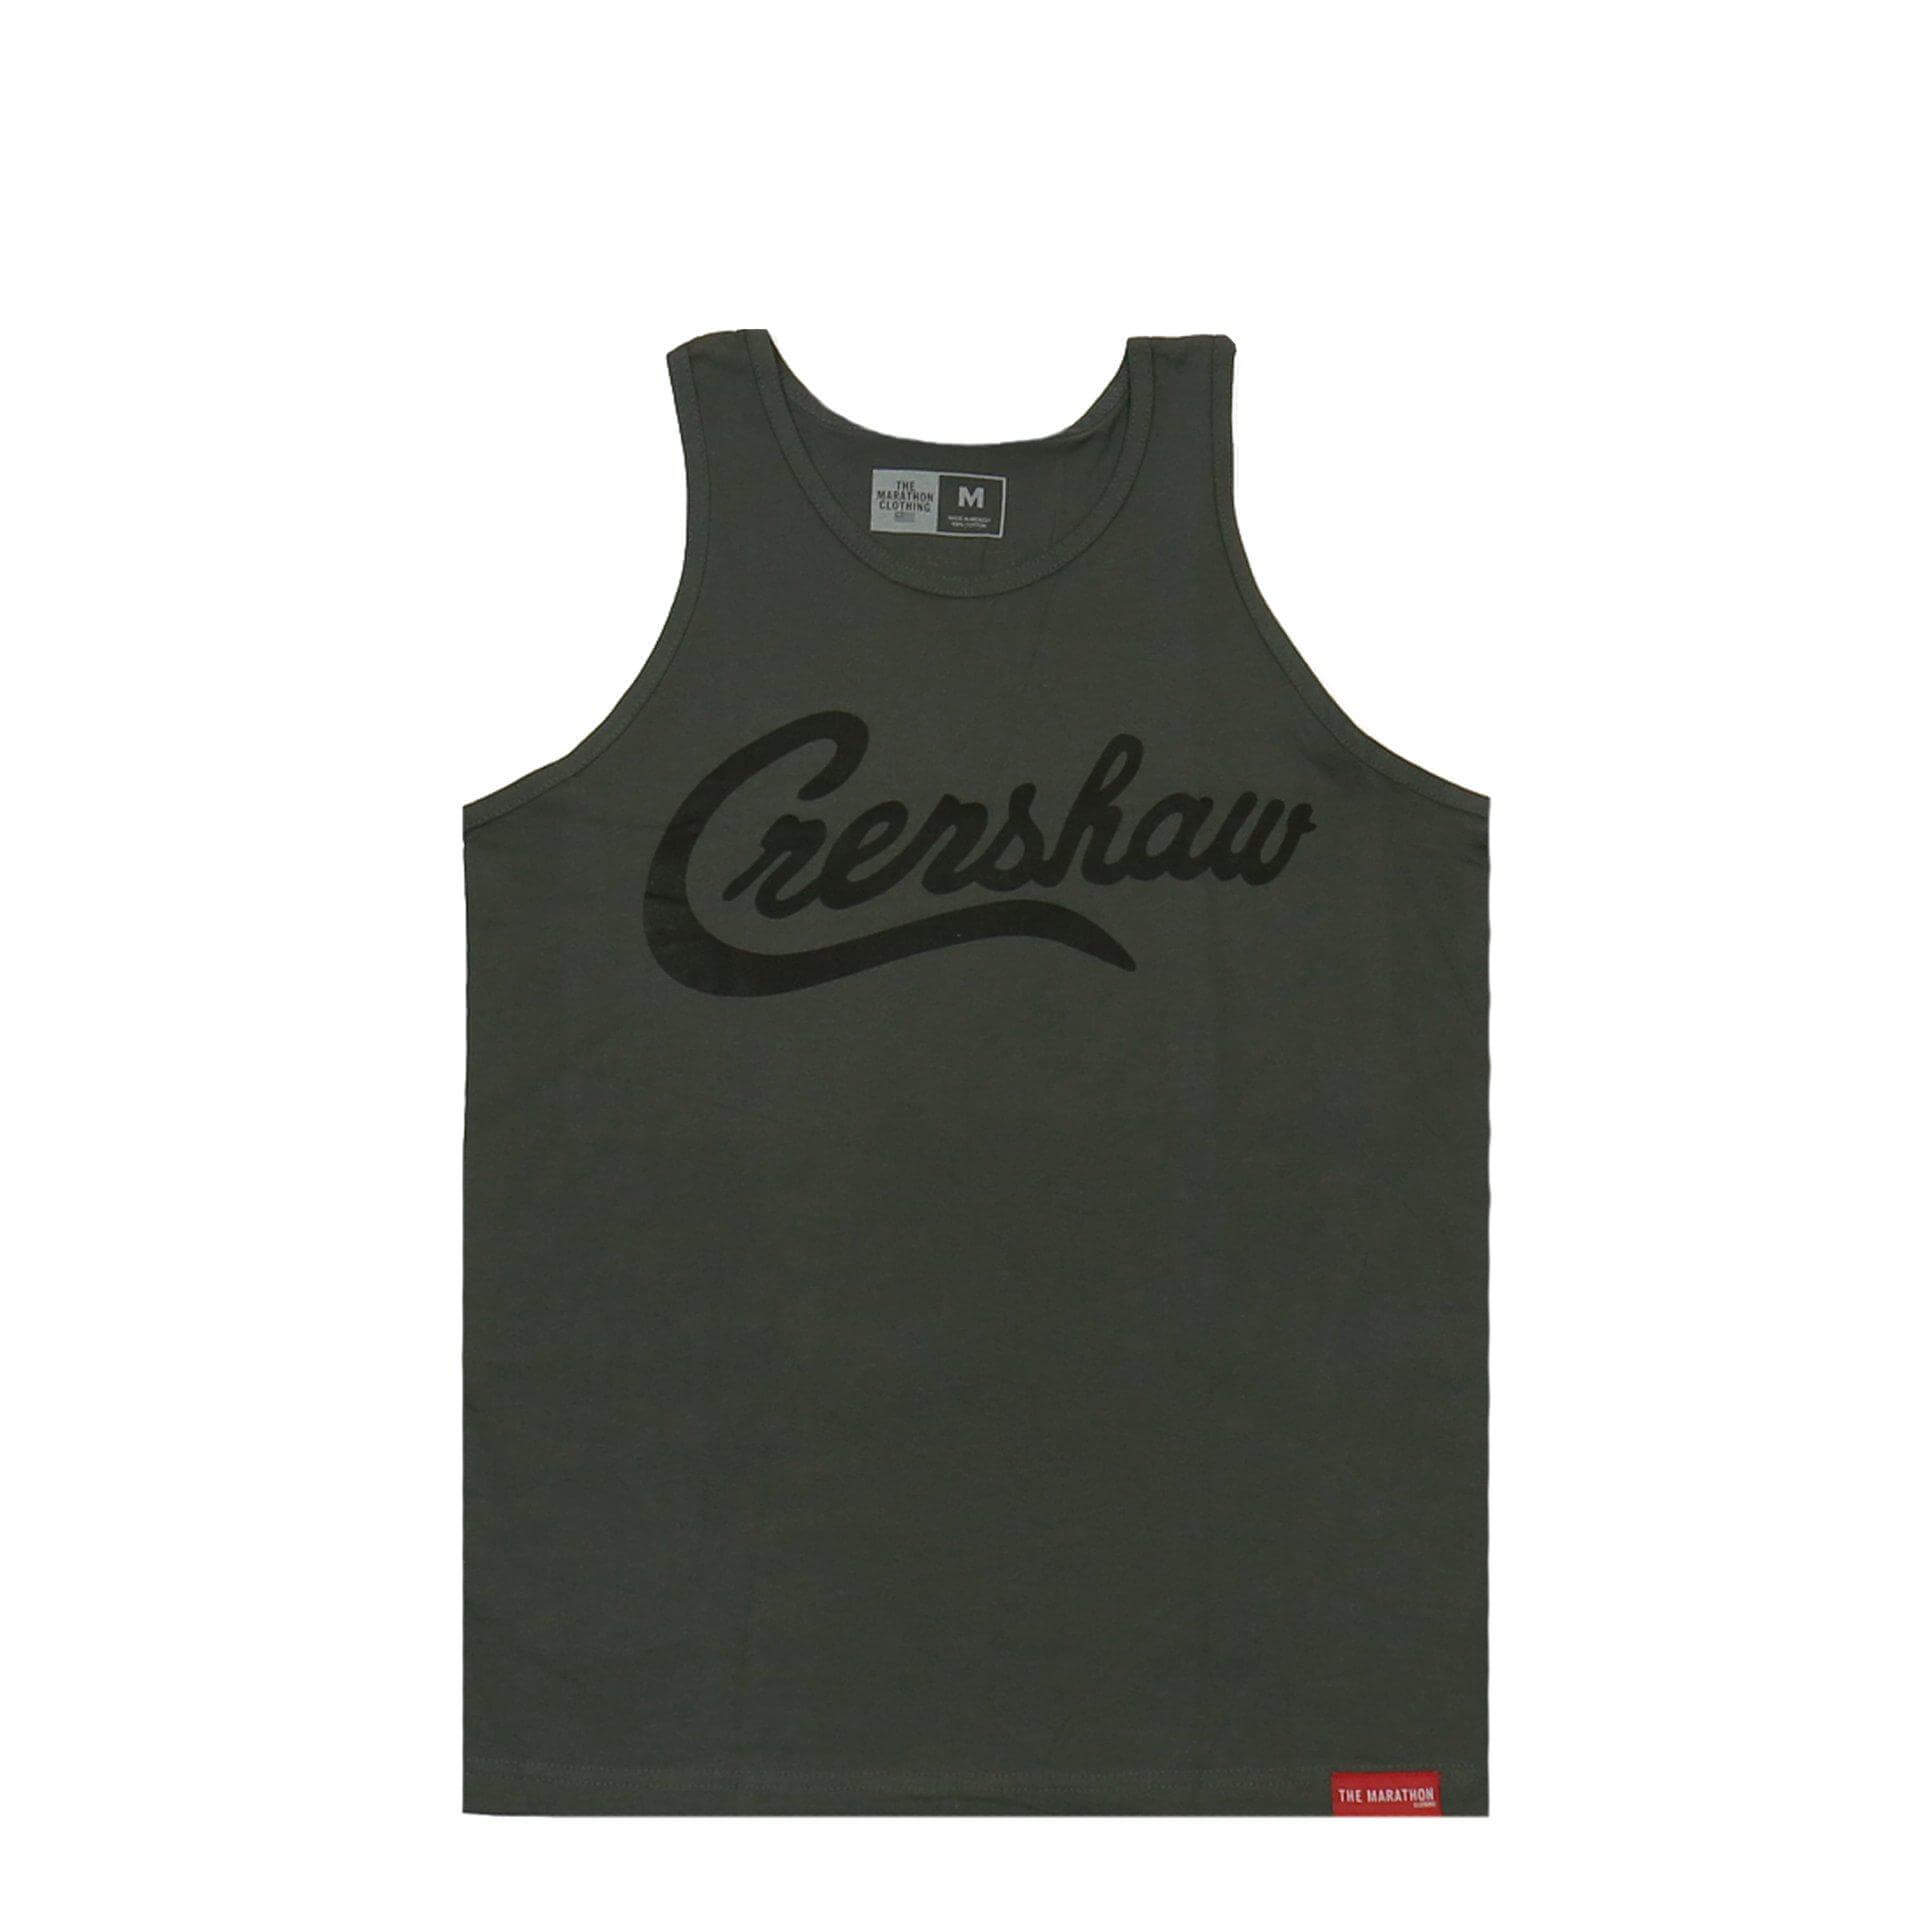 Crenshaw Tank Top - Charcoal/Black – The Marathon Clothing